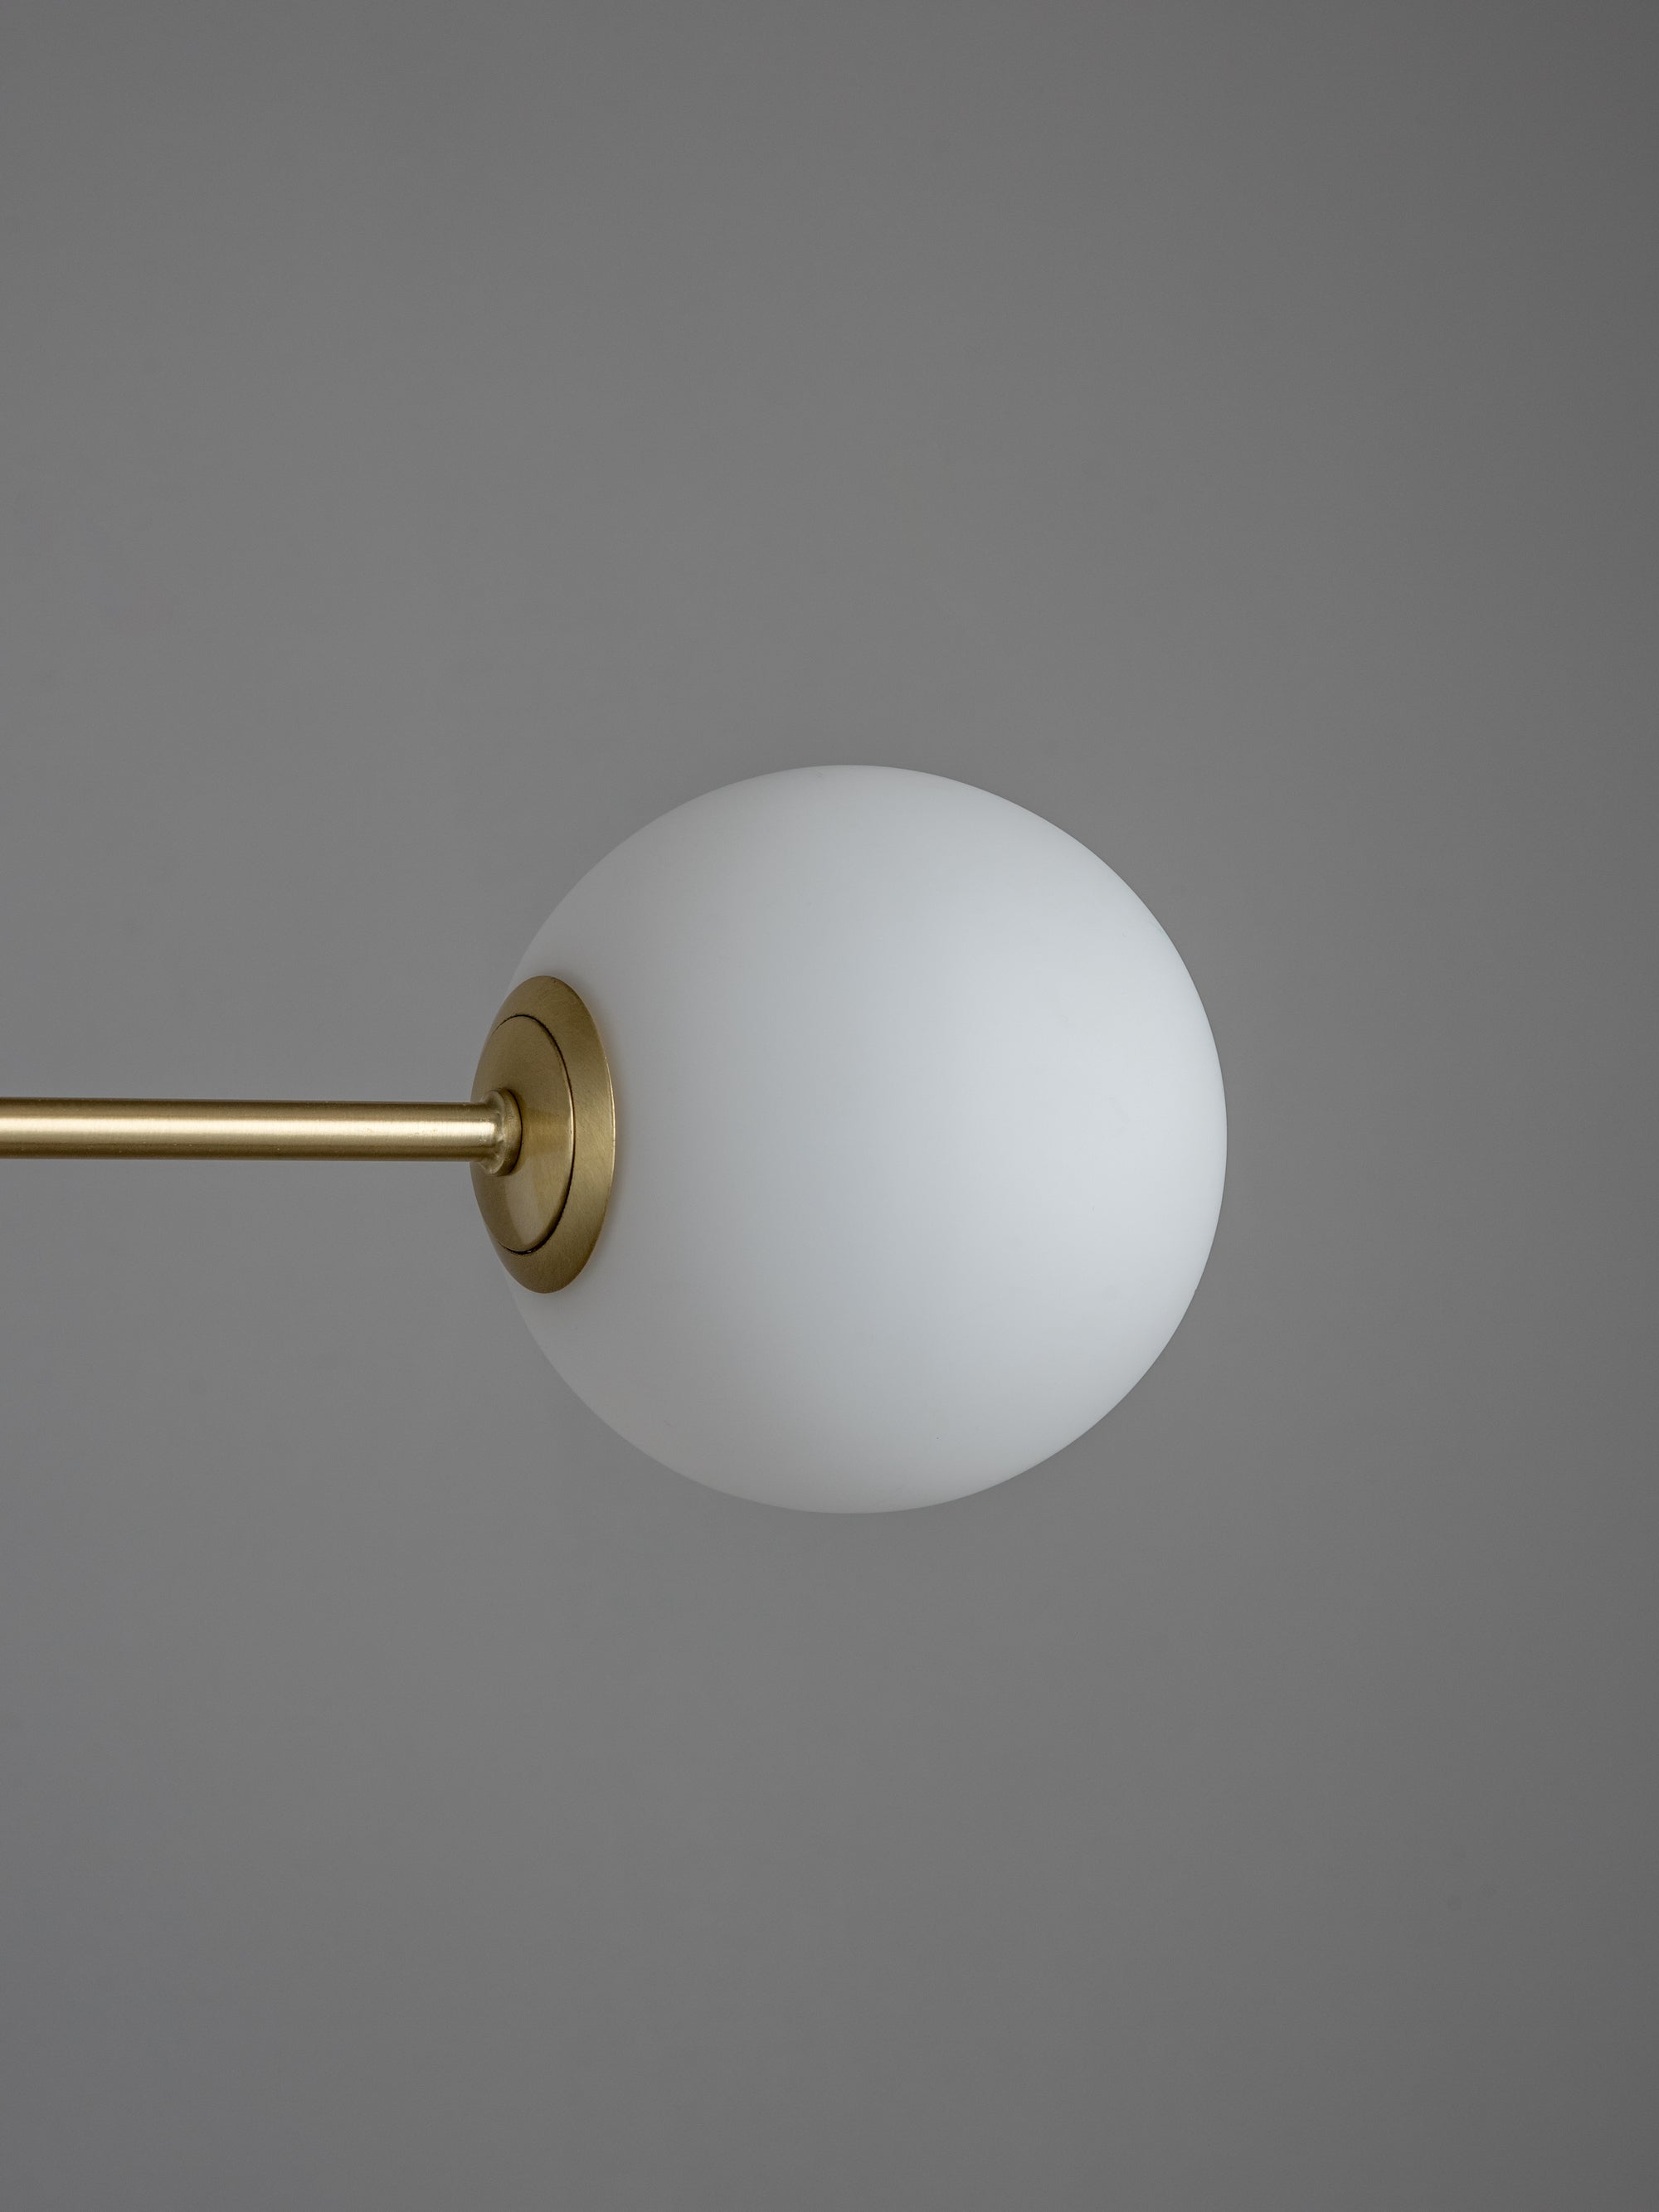 Chelso - 6 light brass and opal pendant | Ceiling Light | Lights & Lamps Inc | Modern Affordable Designer Lighting | USA